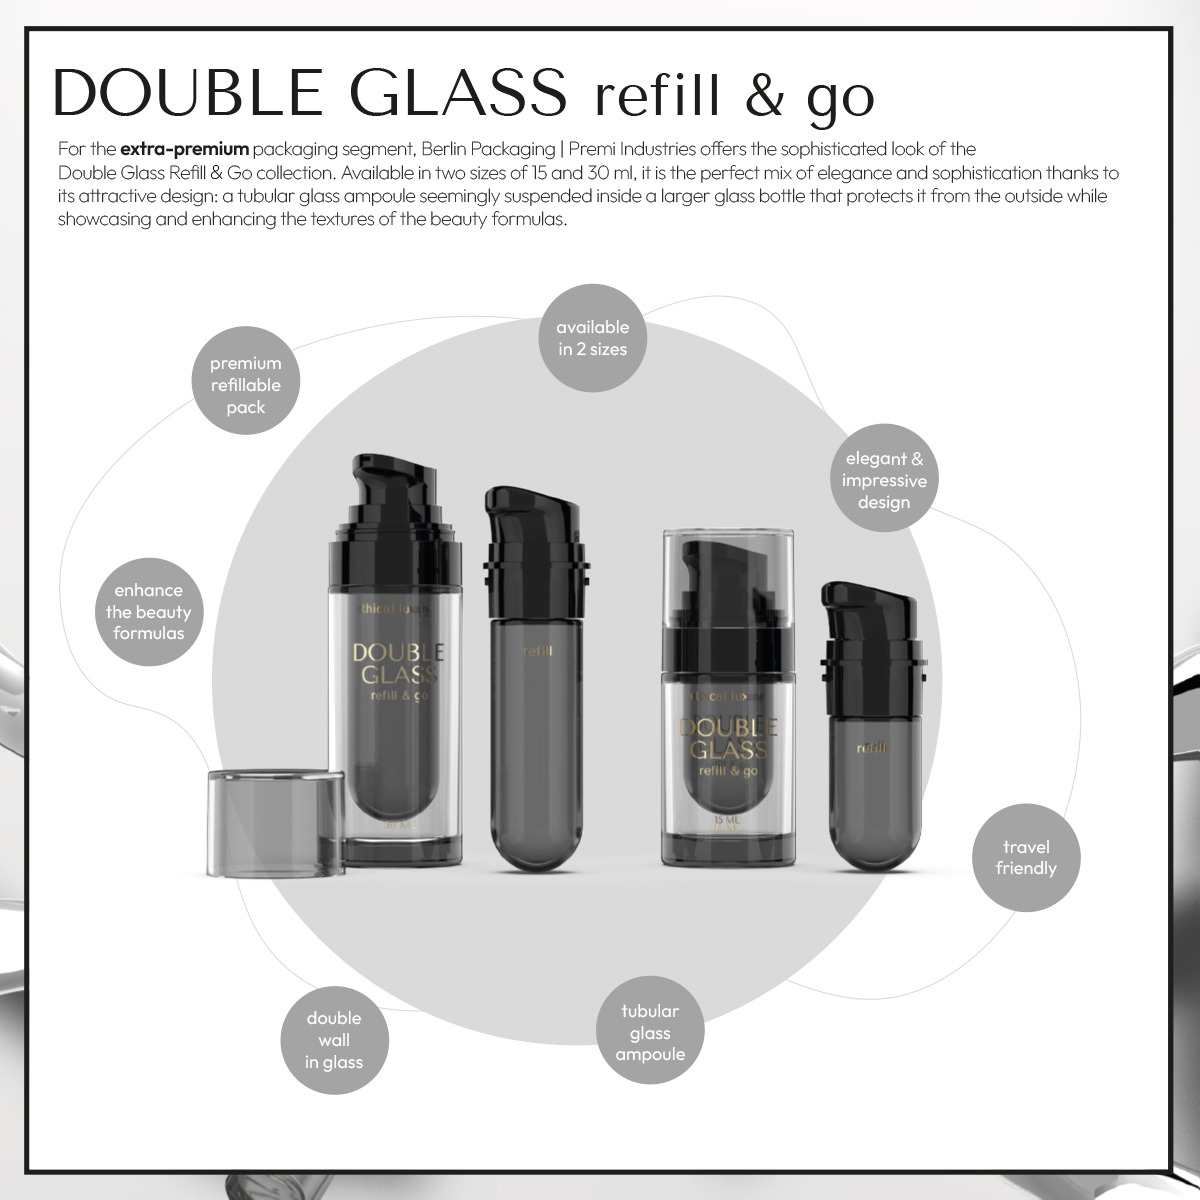 02-DOUBLE GLASS REFILL & GO